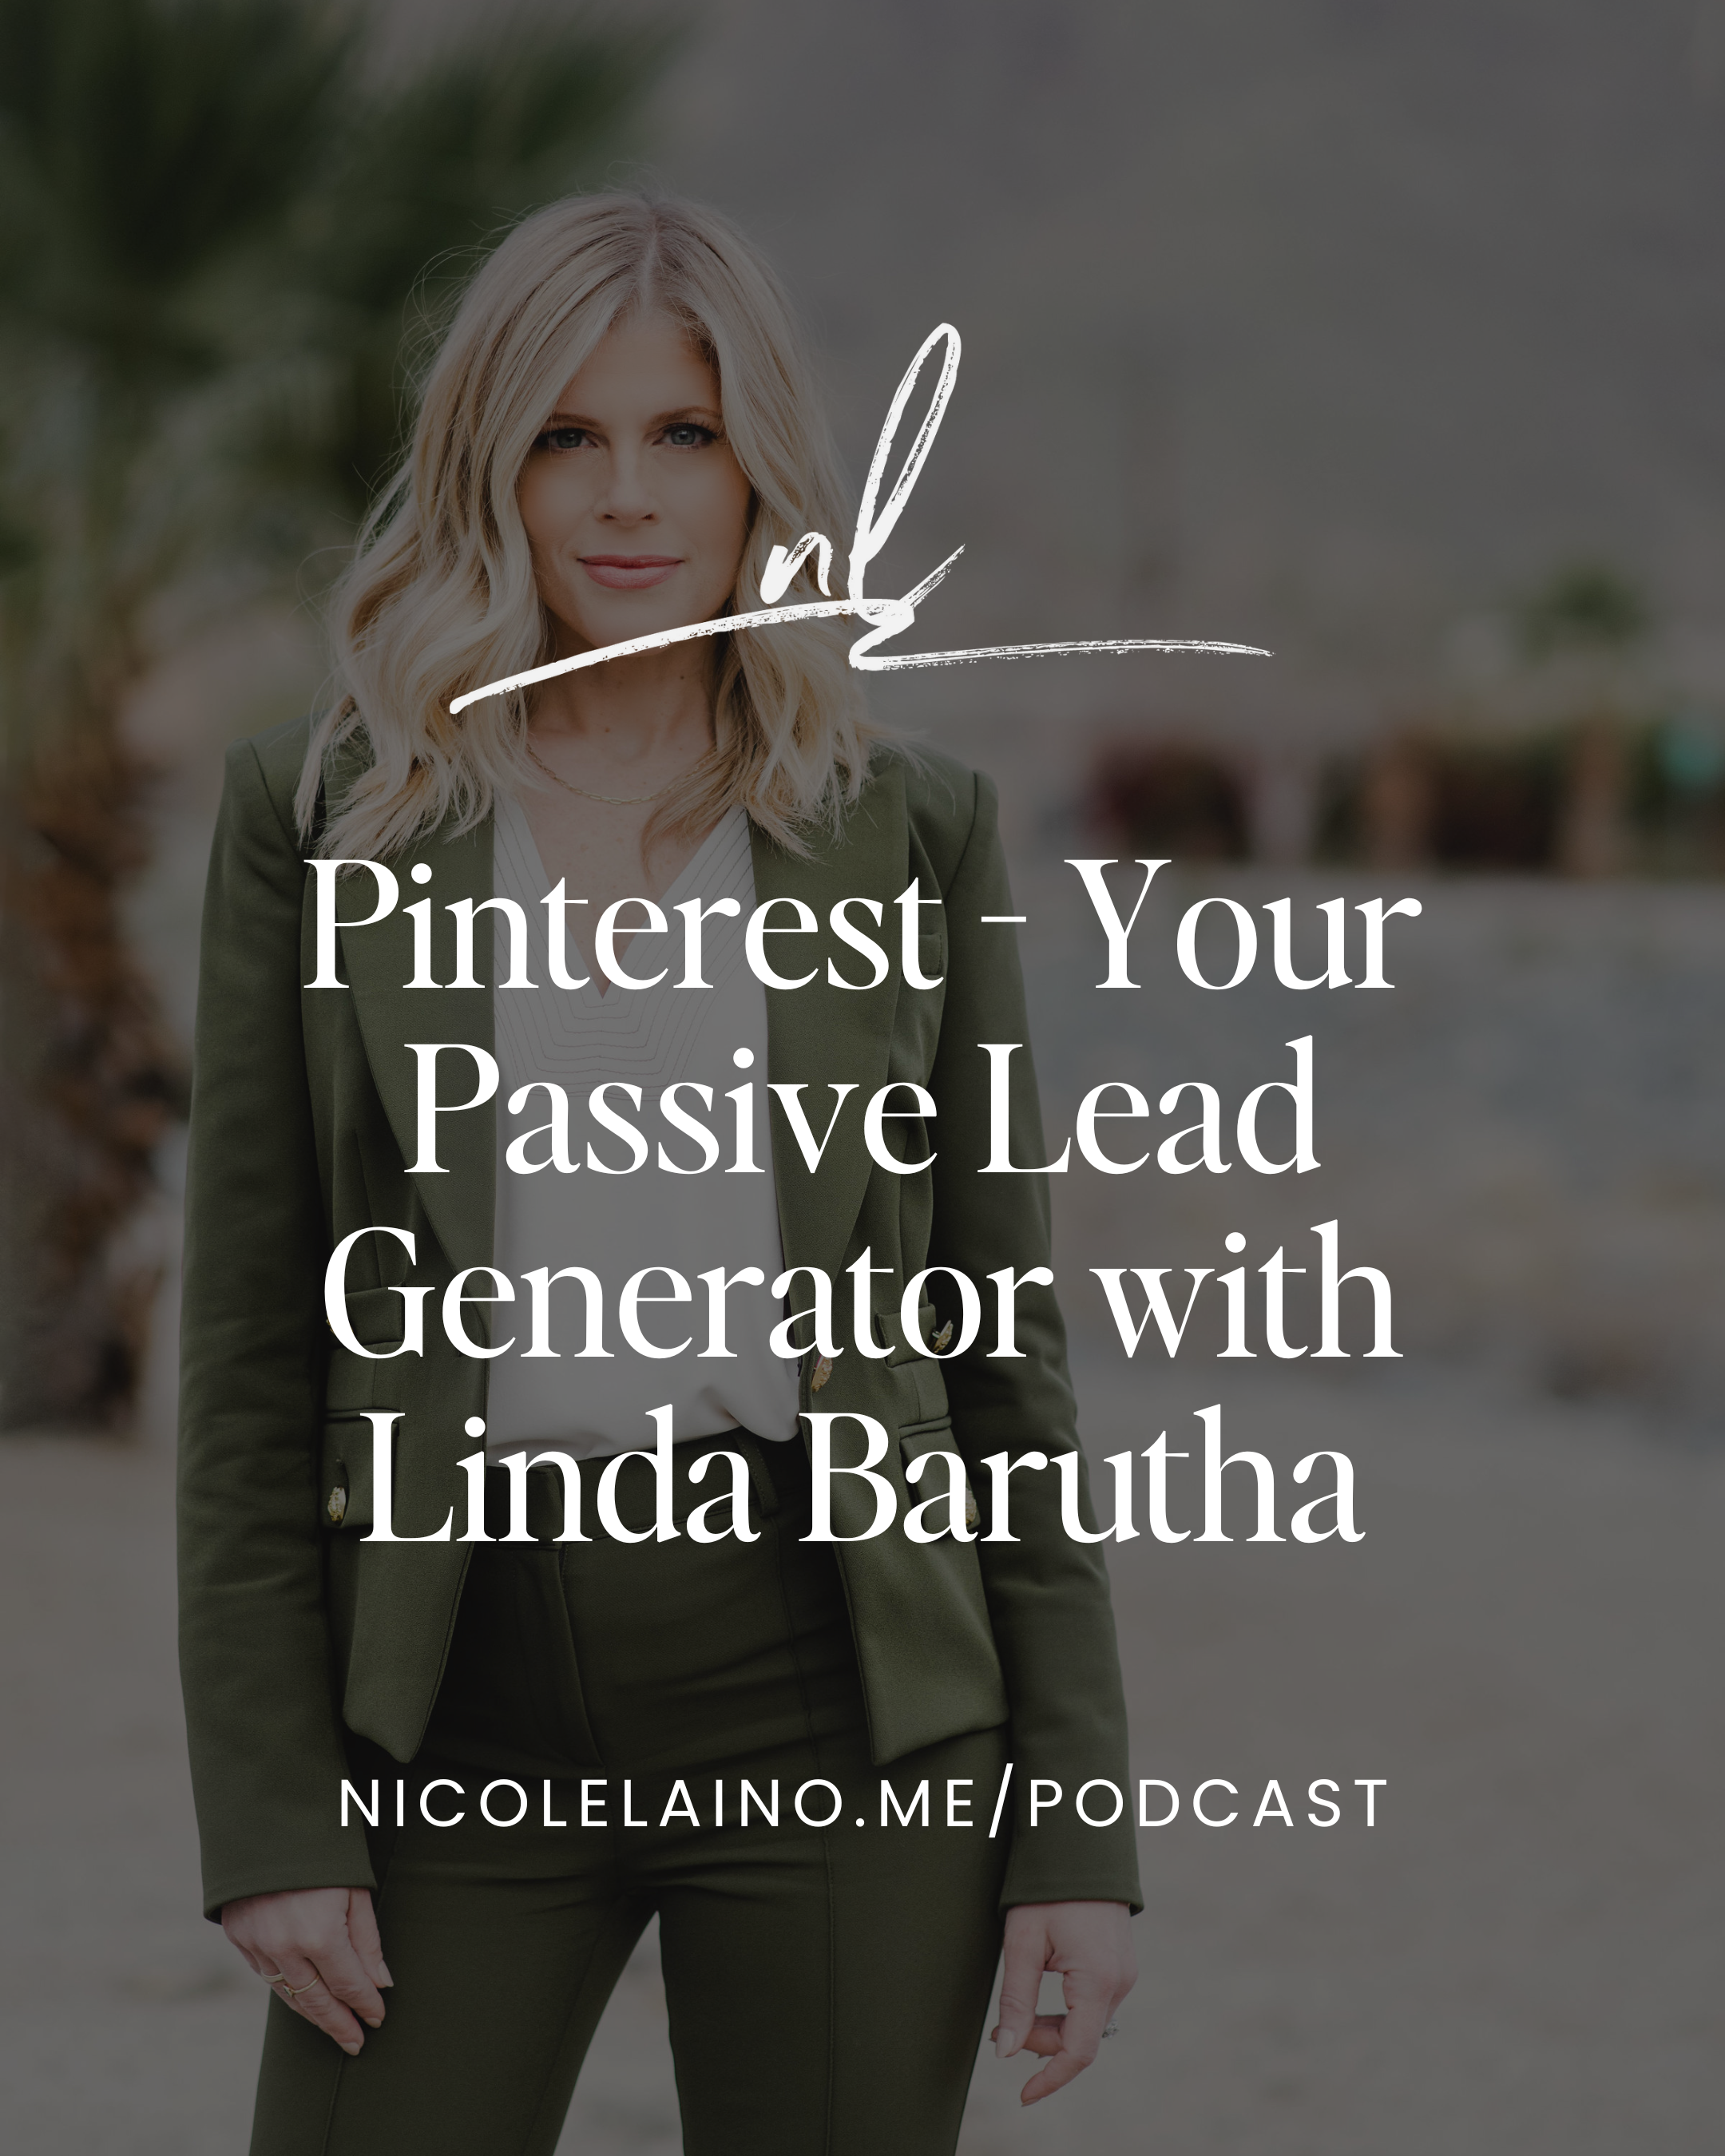 Pinterest - Your Passive Lead Generator with Linda Barutha